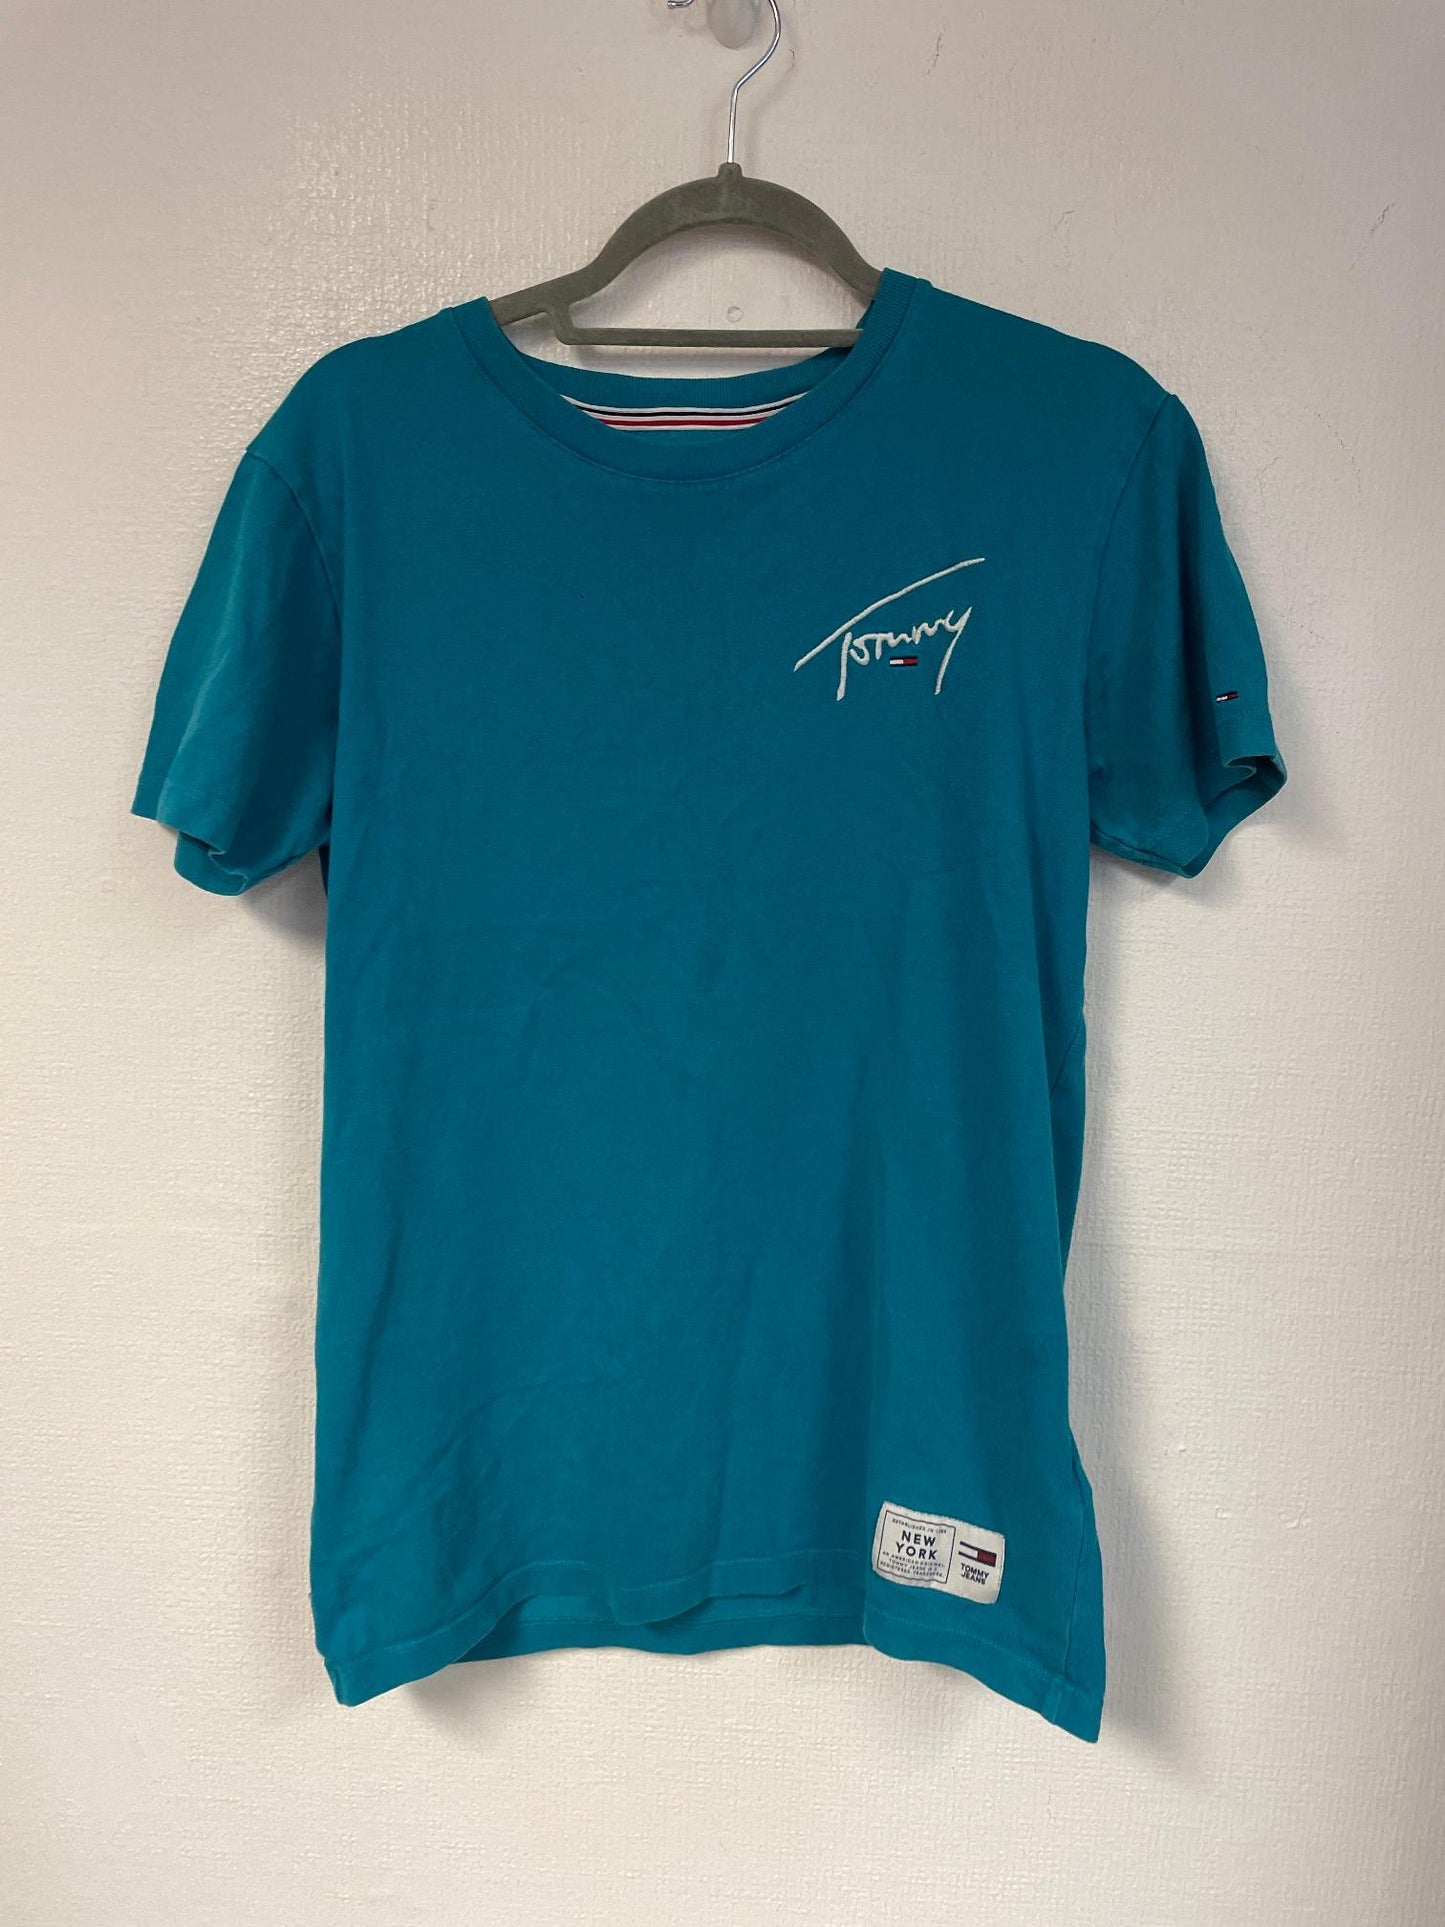 Teal Tommy t-shirt, size XS - Damaged Item Sale